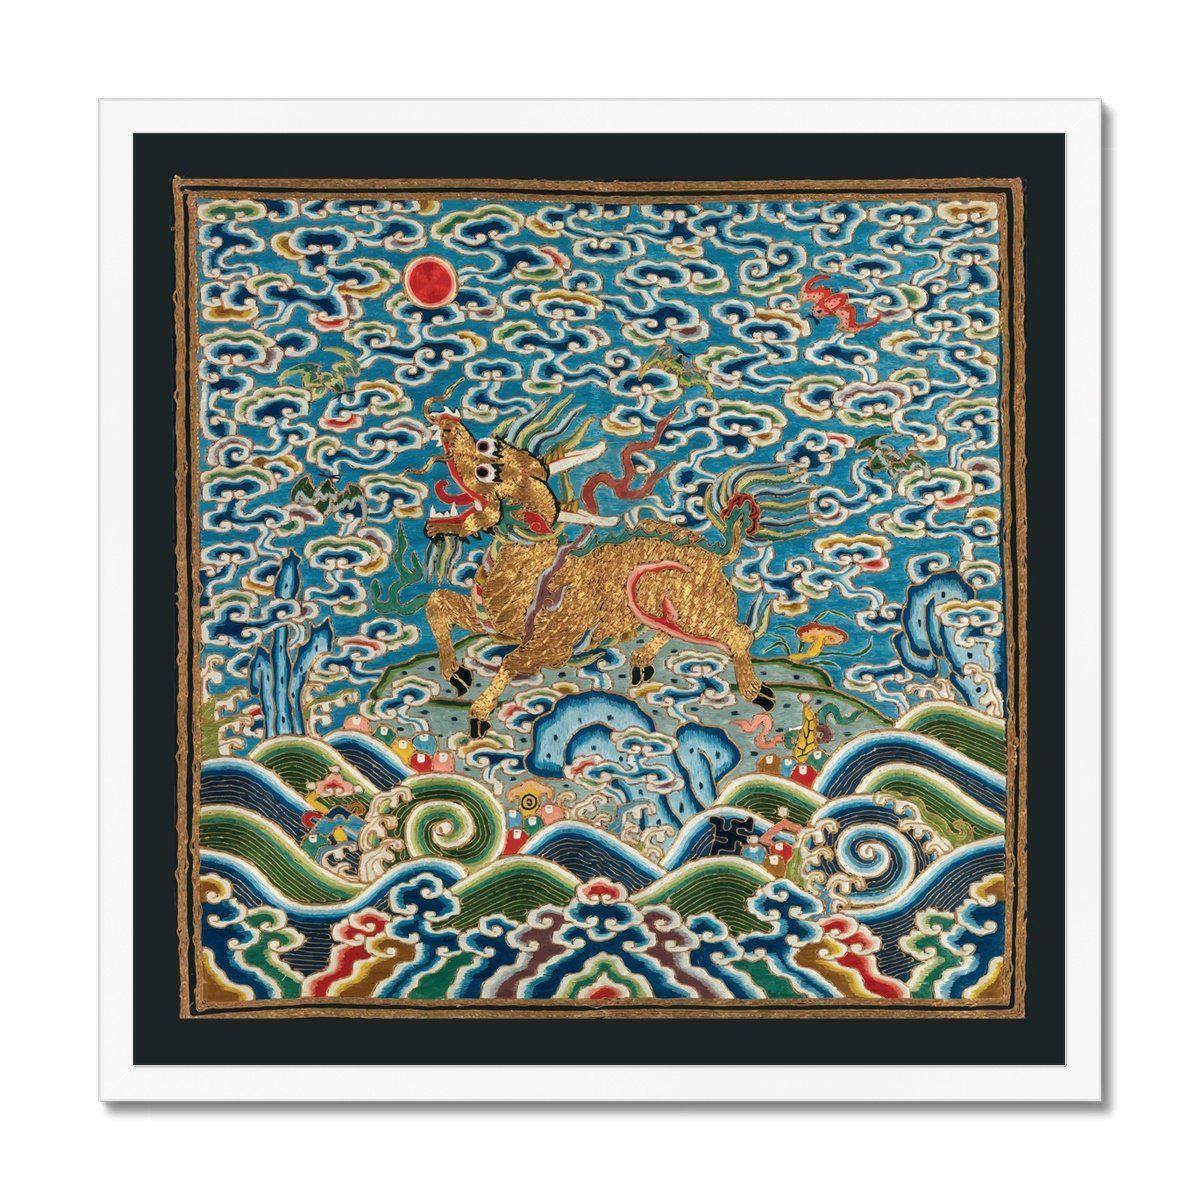 Framed Print 12"x12" / White Frame Qing Dynasty Silk Embroidery Design | Framed Print